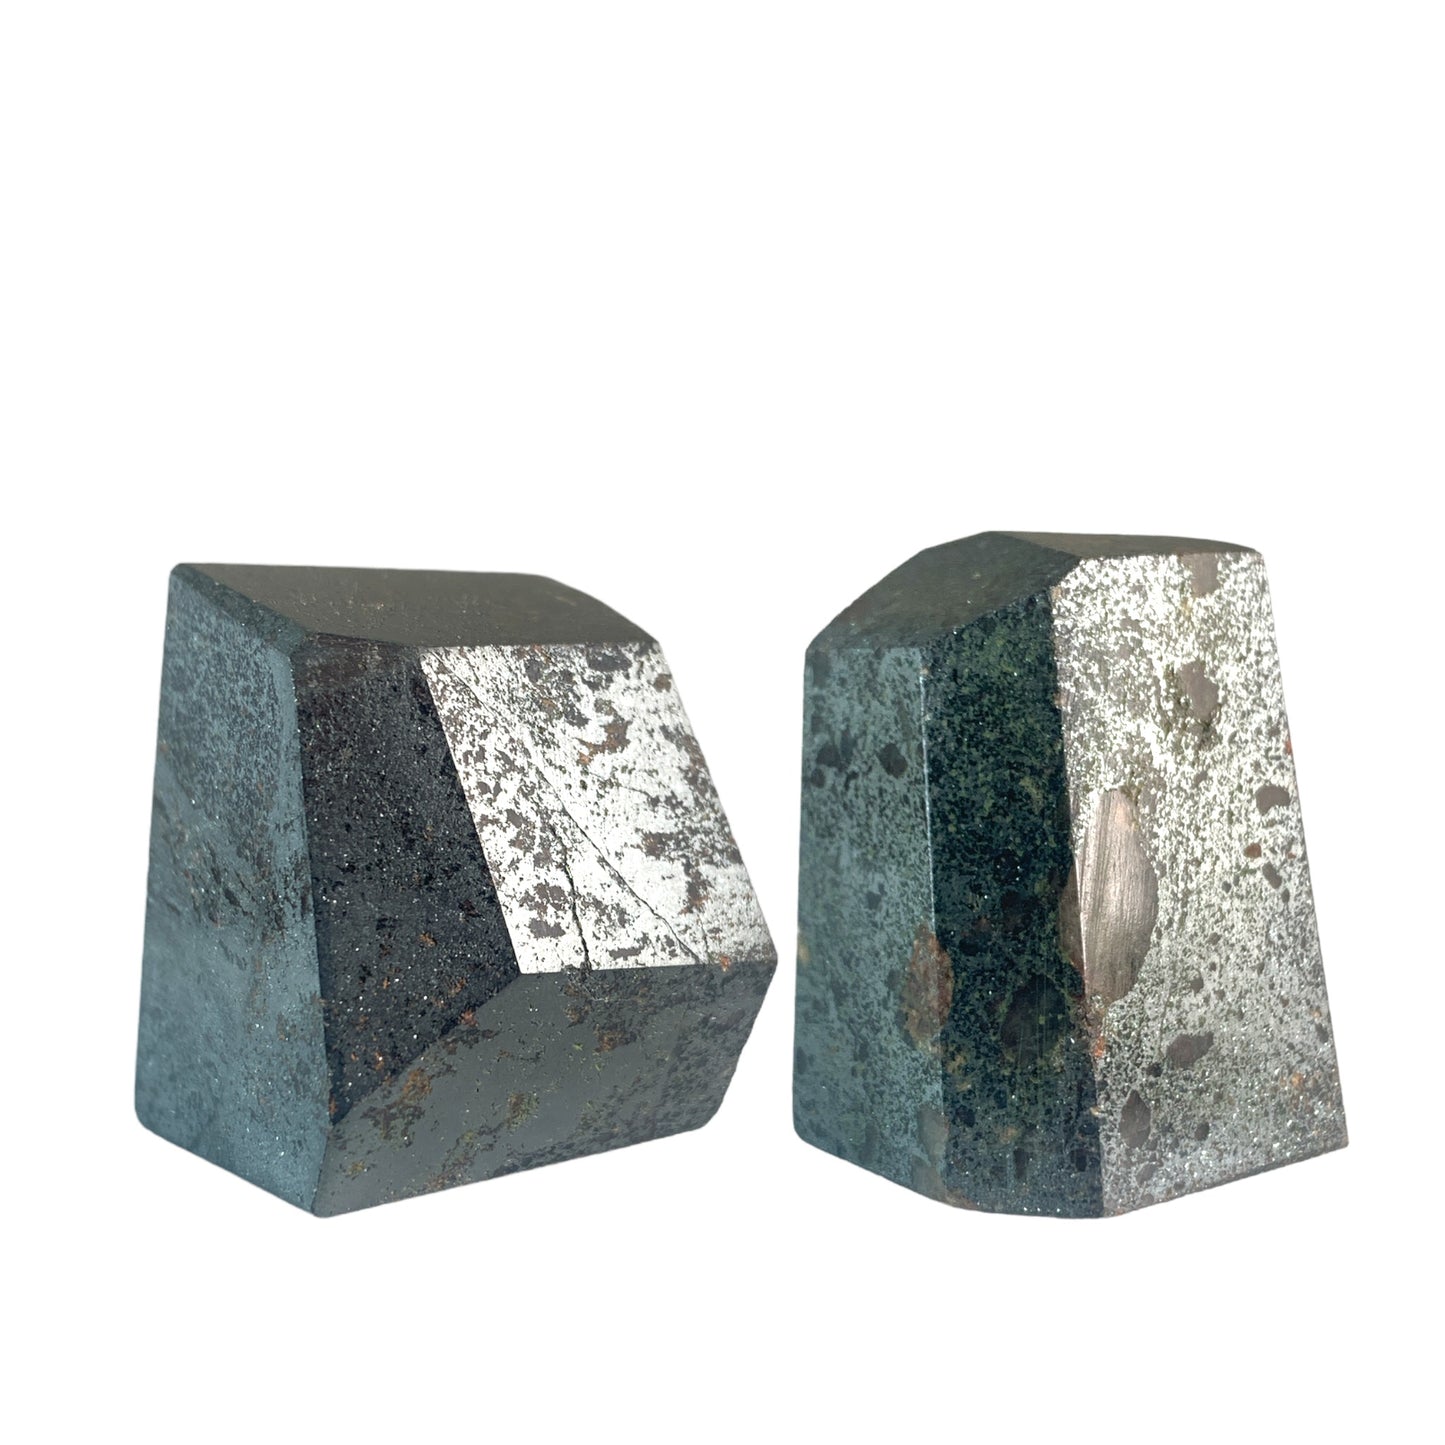 Hematite Chunky Points - 40-60mm (8-10pcs per kg) - Price per gram - Polished Points